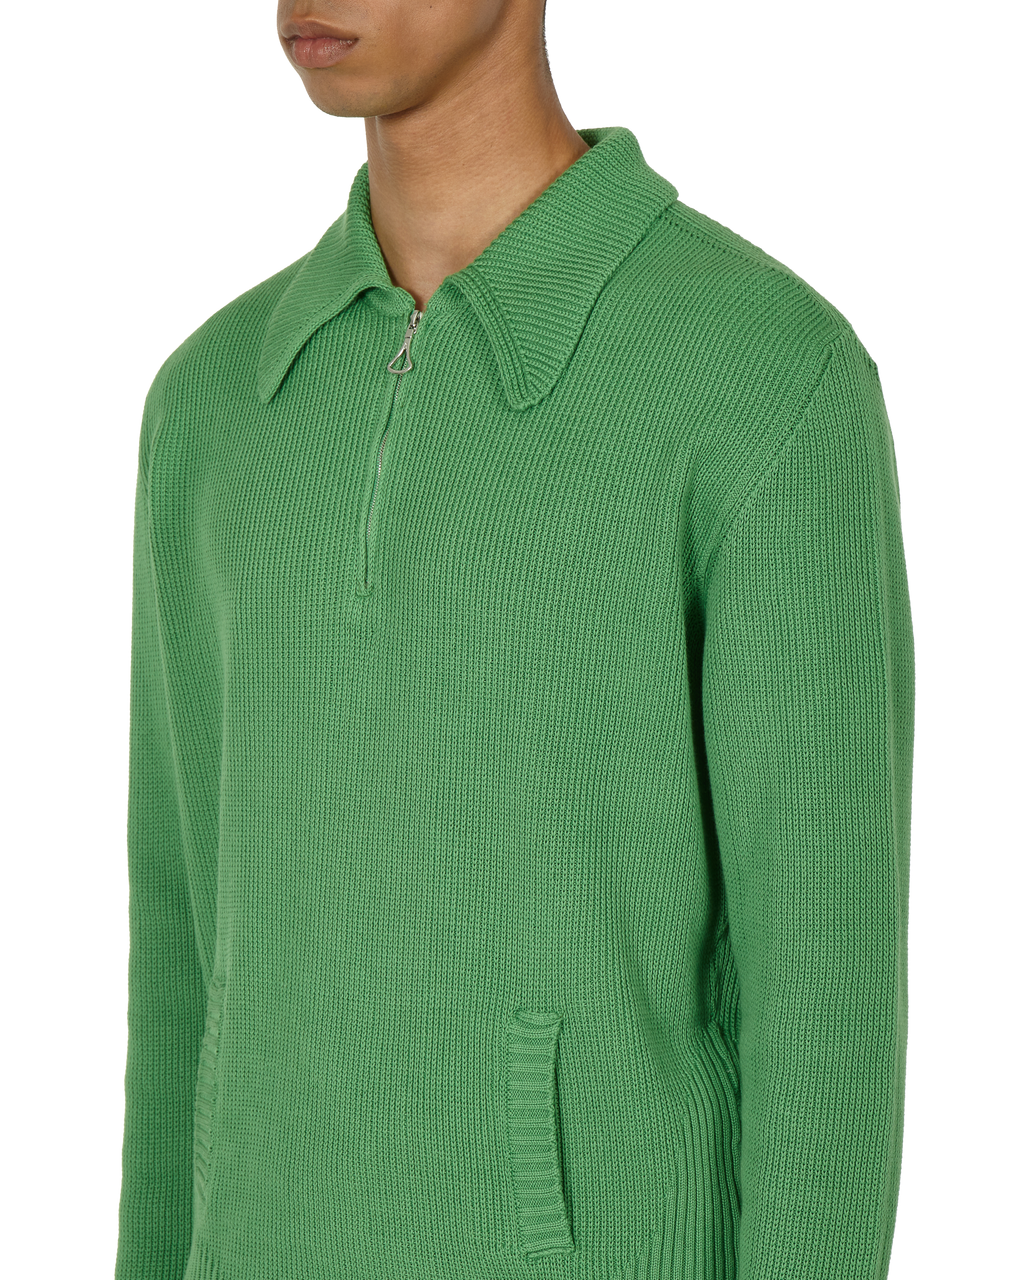 _J.L - A.L_ Lancet Zipped Sweater J277370-S-Green 2